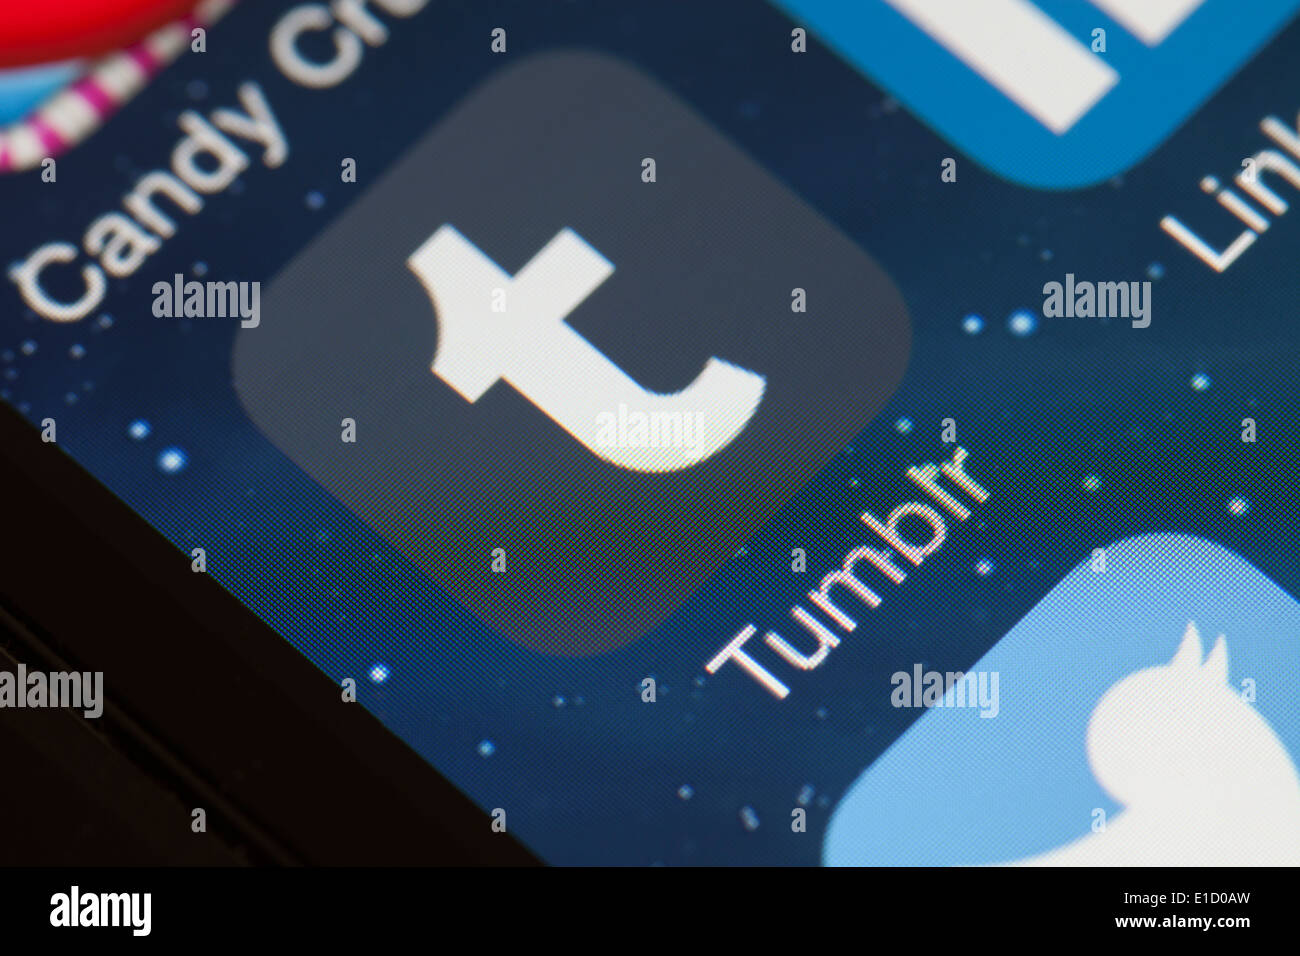 Light brown Roblox icon  App icon design, Iphone wallpaper tumblr